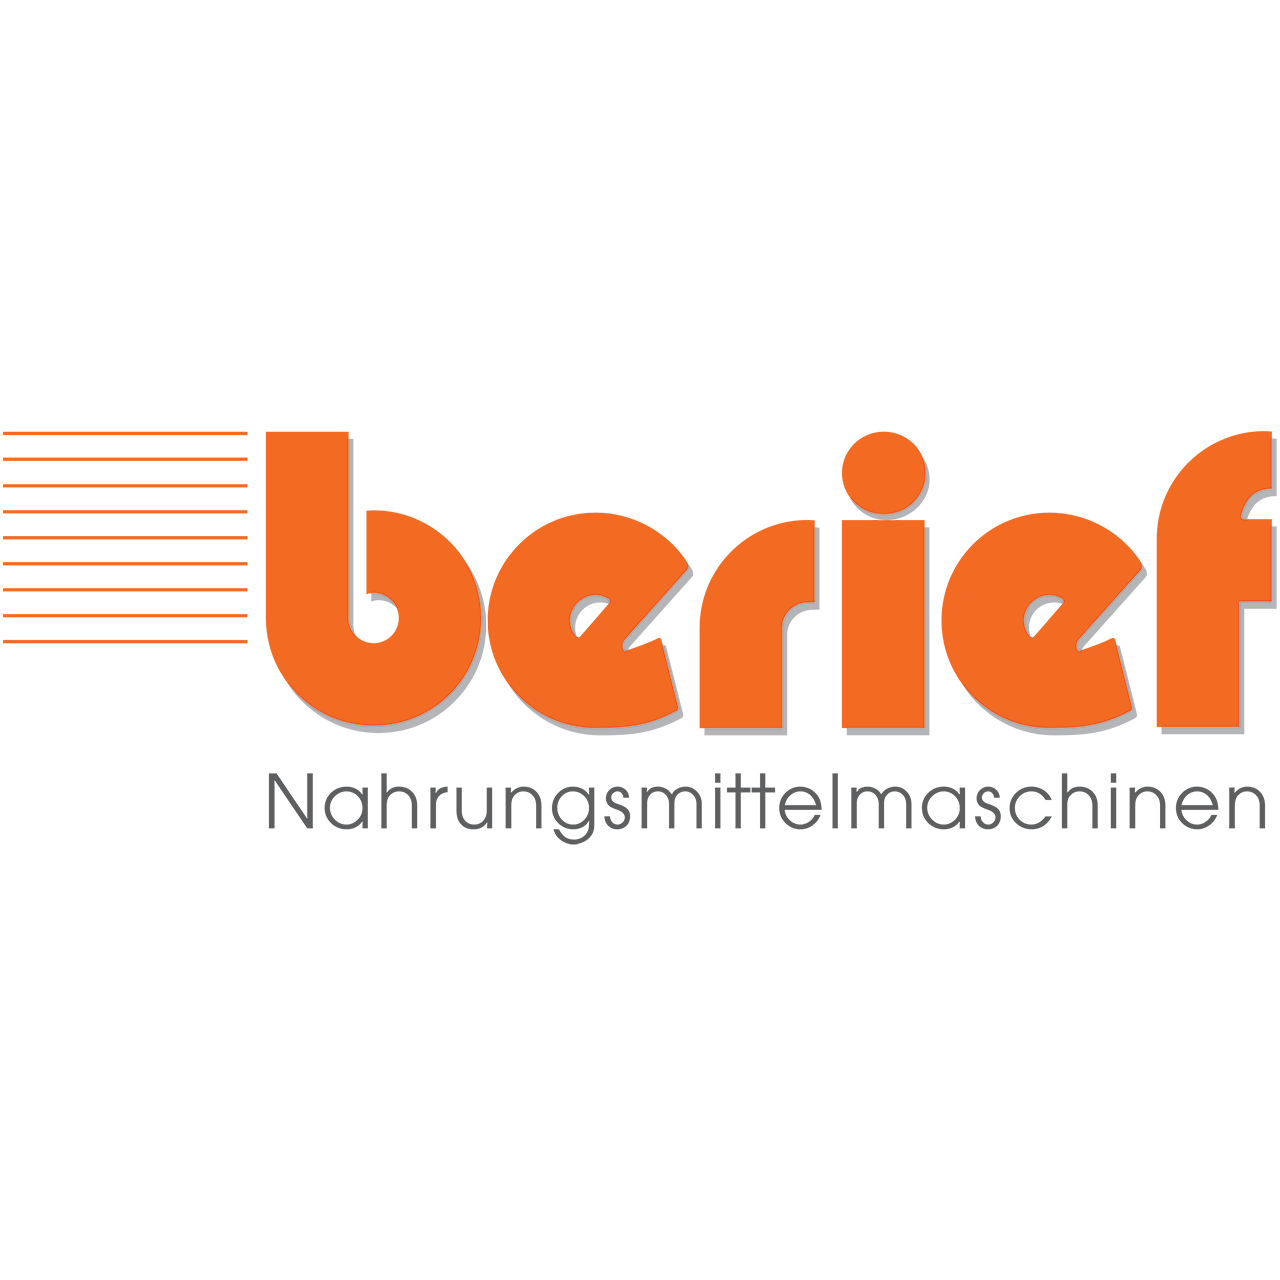 Logo Berief Nahrungsmittelmaschinen GmbH & Co. KG